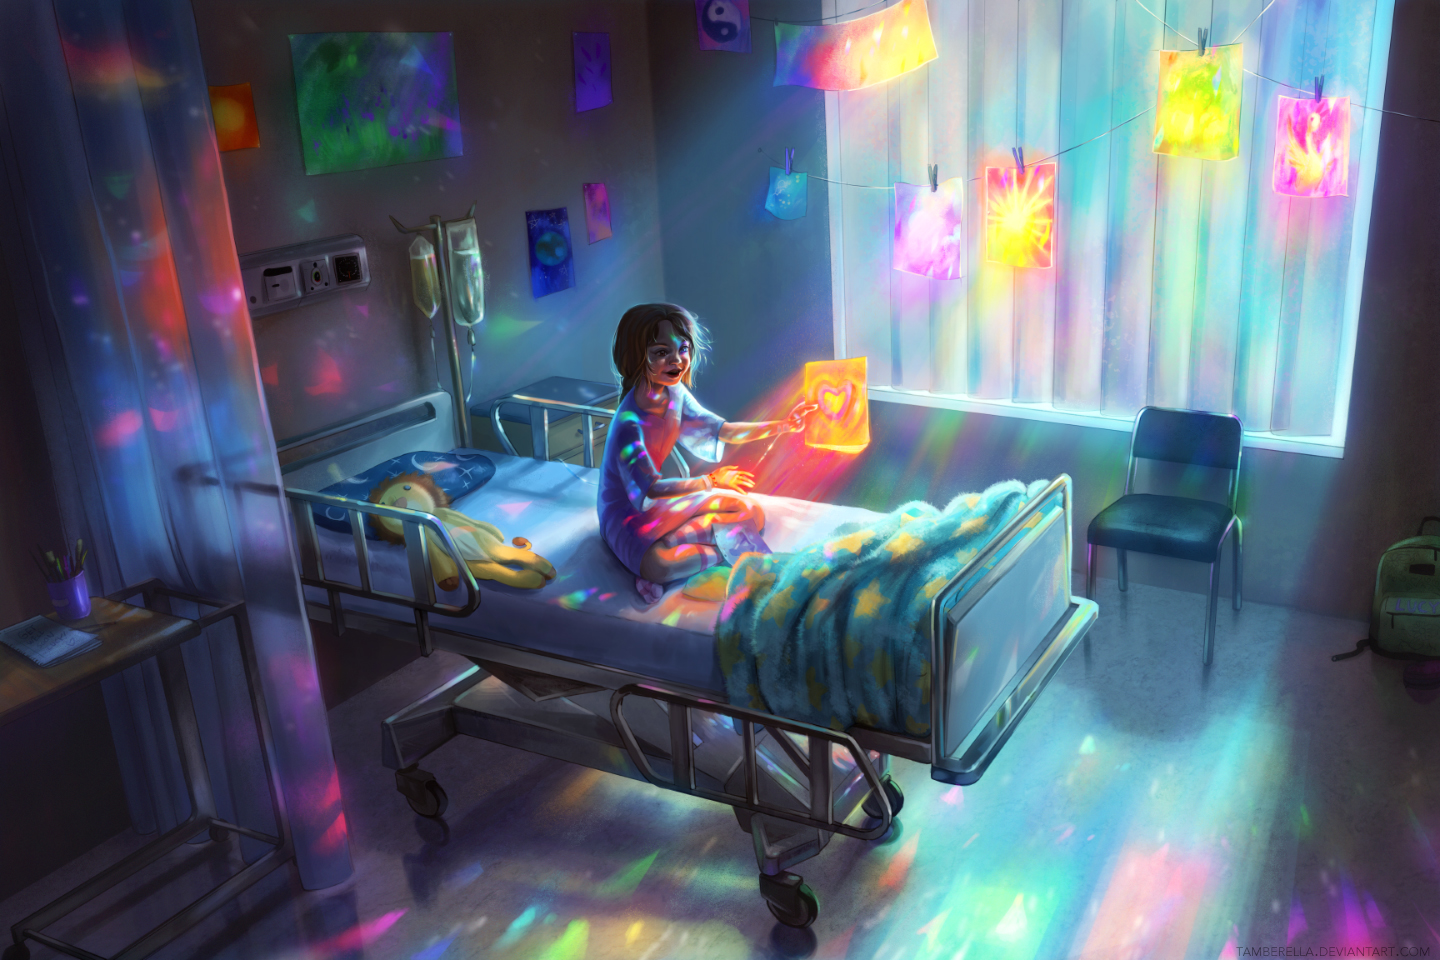 Hospital Bed Children Artwork 2D Emotion Teddy Bears Digital Art 1440x960